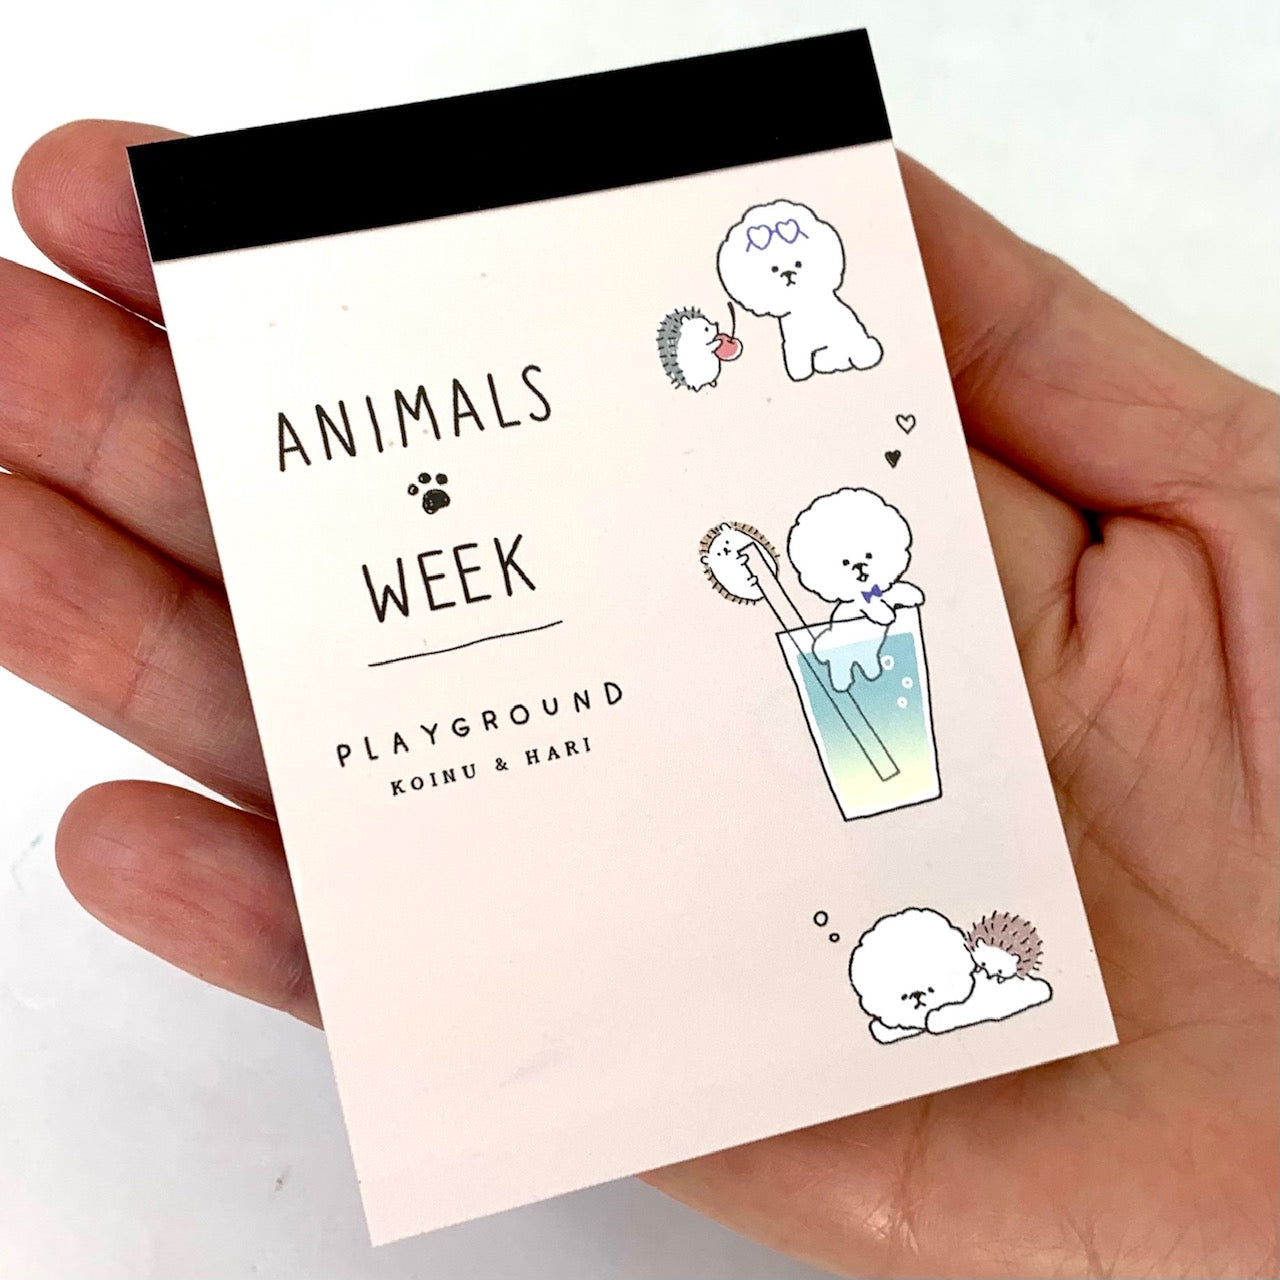 X 101100 CRUX Animals Week Dog Hedgehog Boba Mini Notepads-DISCONTINUED